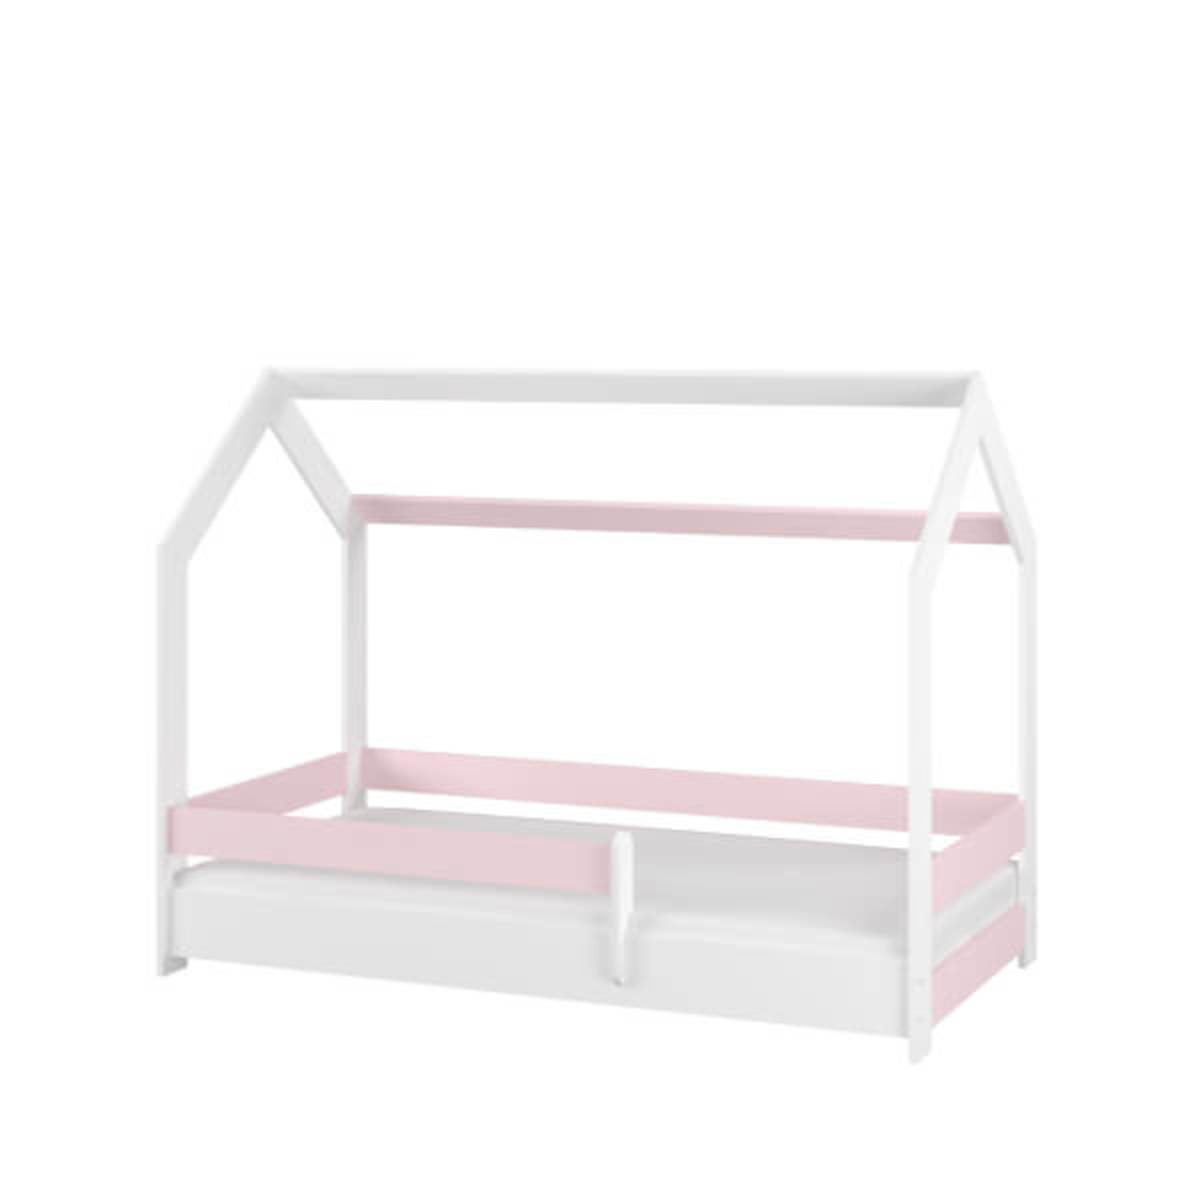 Hausbett Sofia 180x80 cm - rosa - Bett + Stauraum